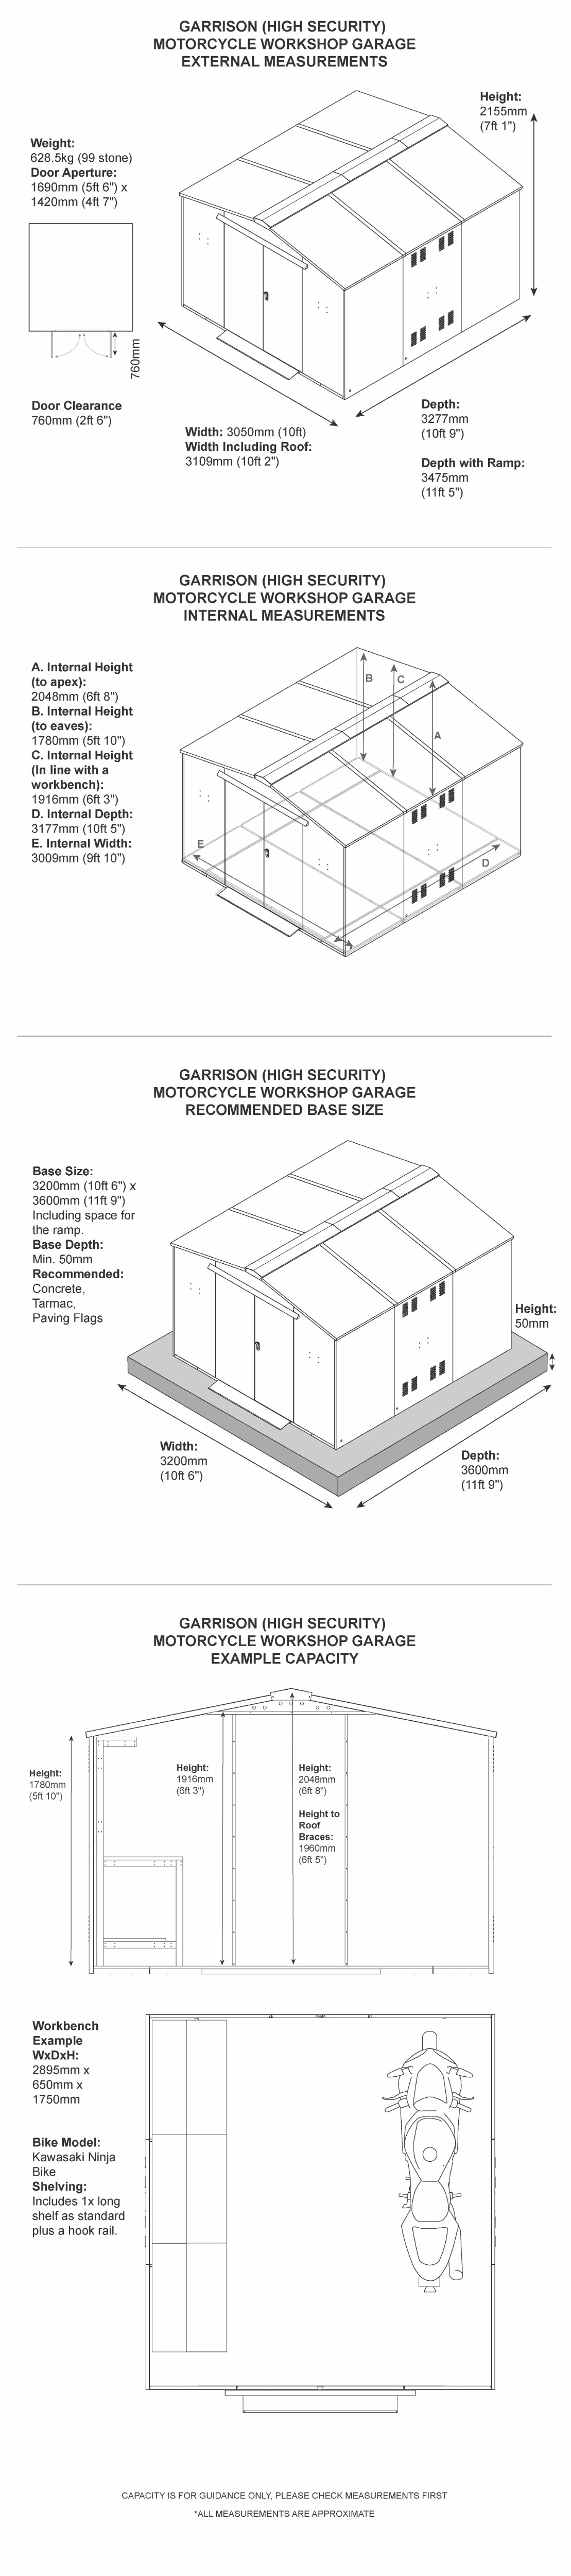 Garrison Motorcycle Workshop Garage Dimensions